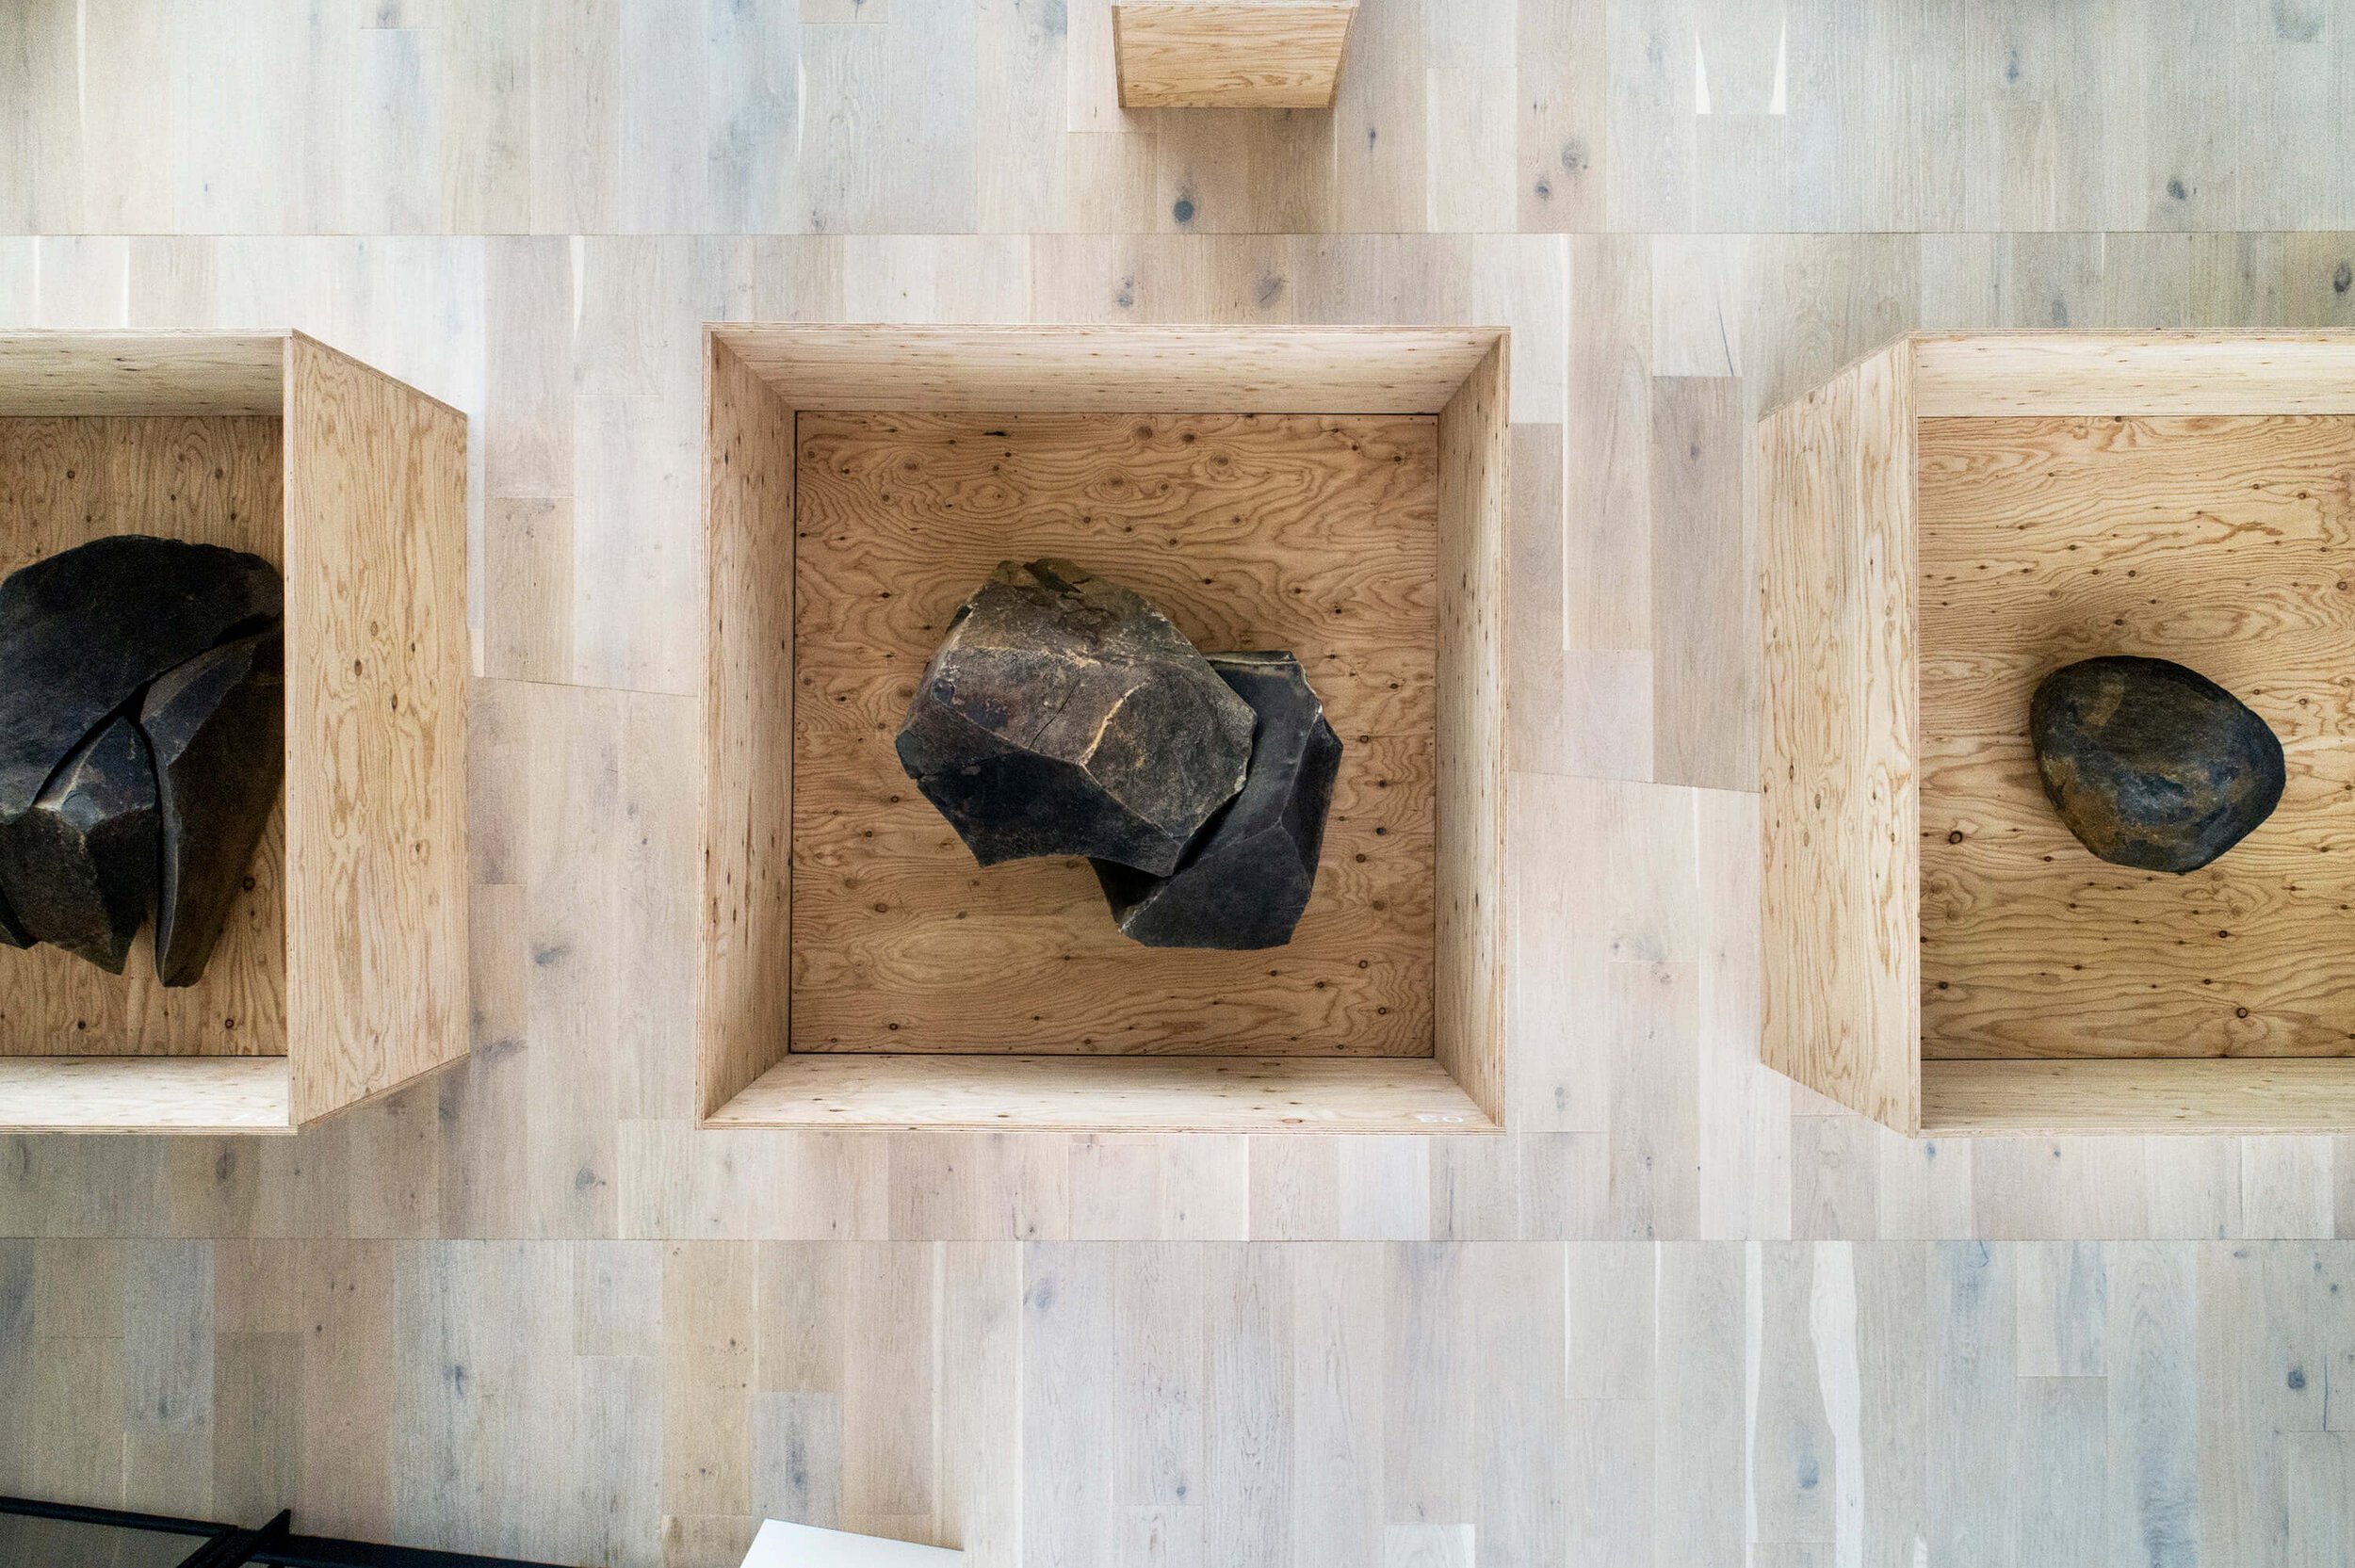  Teruhiro Yanagihara Studioの柳原照弘がデザインしたEARTHSCAPEの木製ボックス 